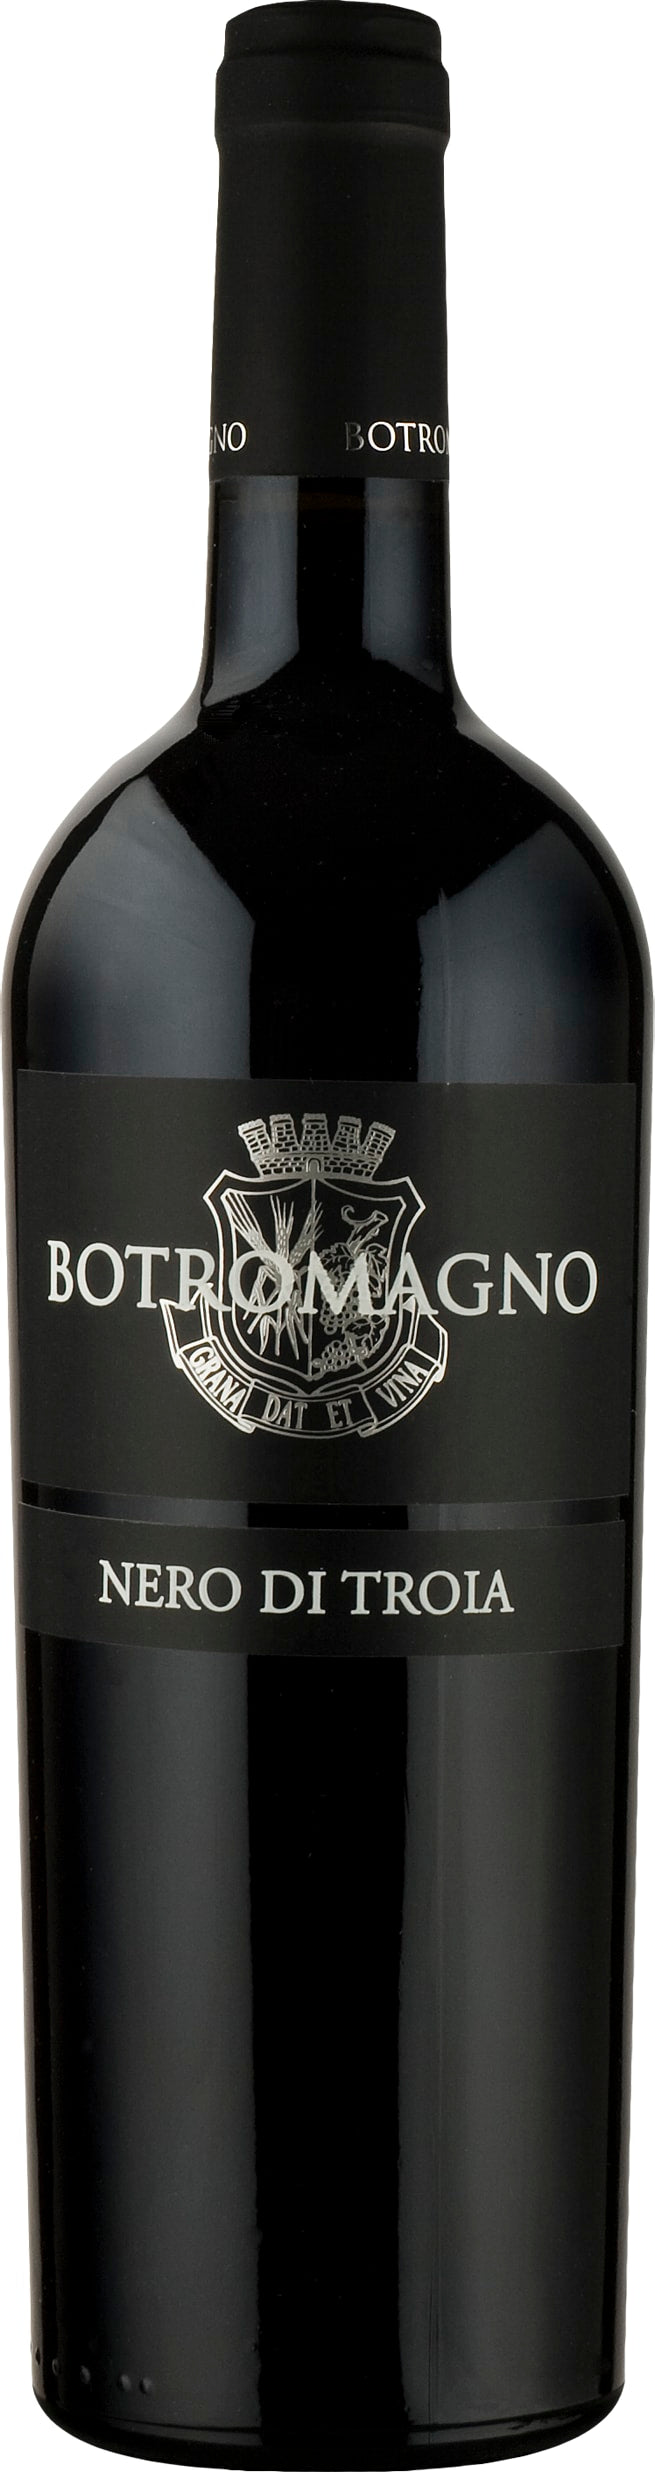 Botromagno Nero di Troia, IGT Murgia Rosso 2021 75cl - Buy Botromagno Wines from GREAT WINES DIRECT wine shop